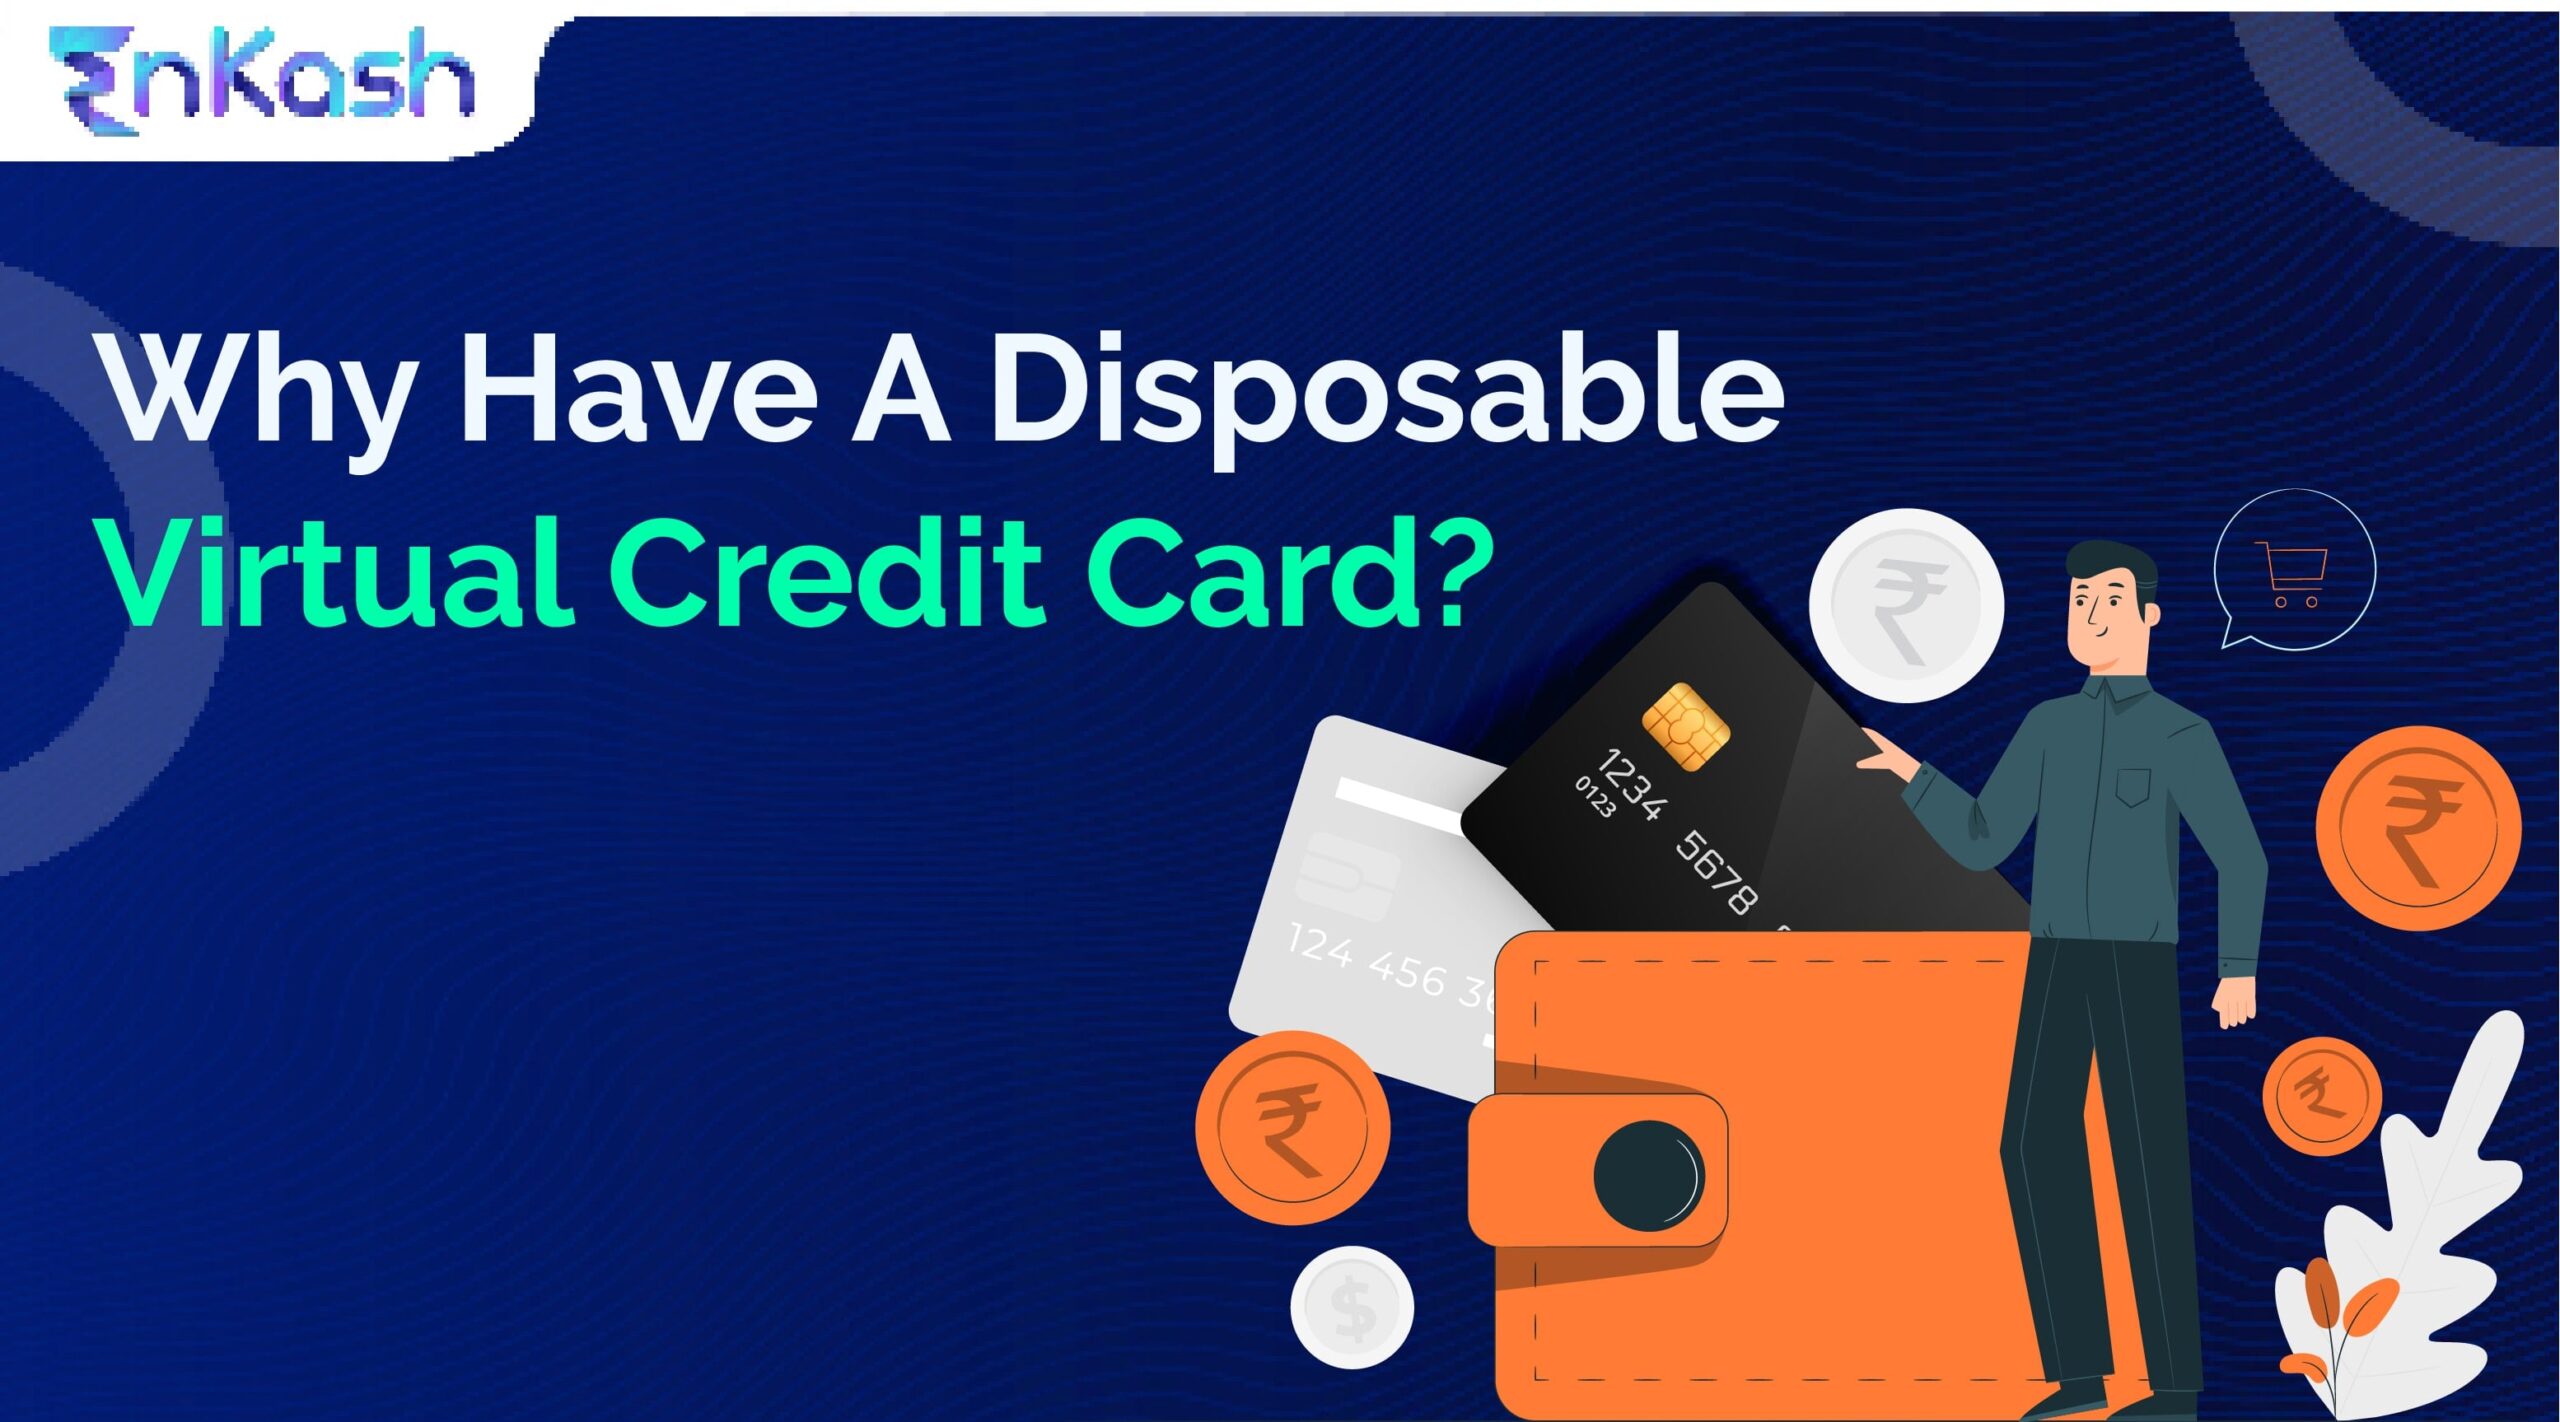 Disposable virtual credit card